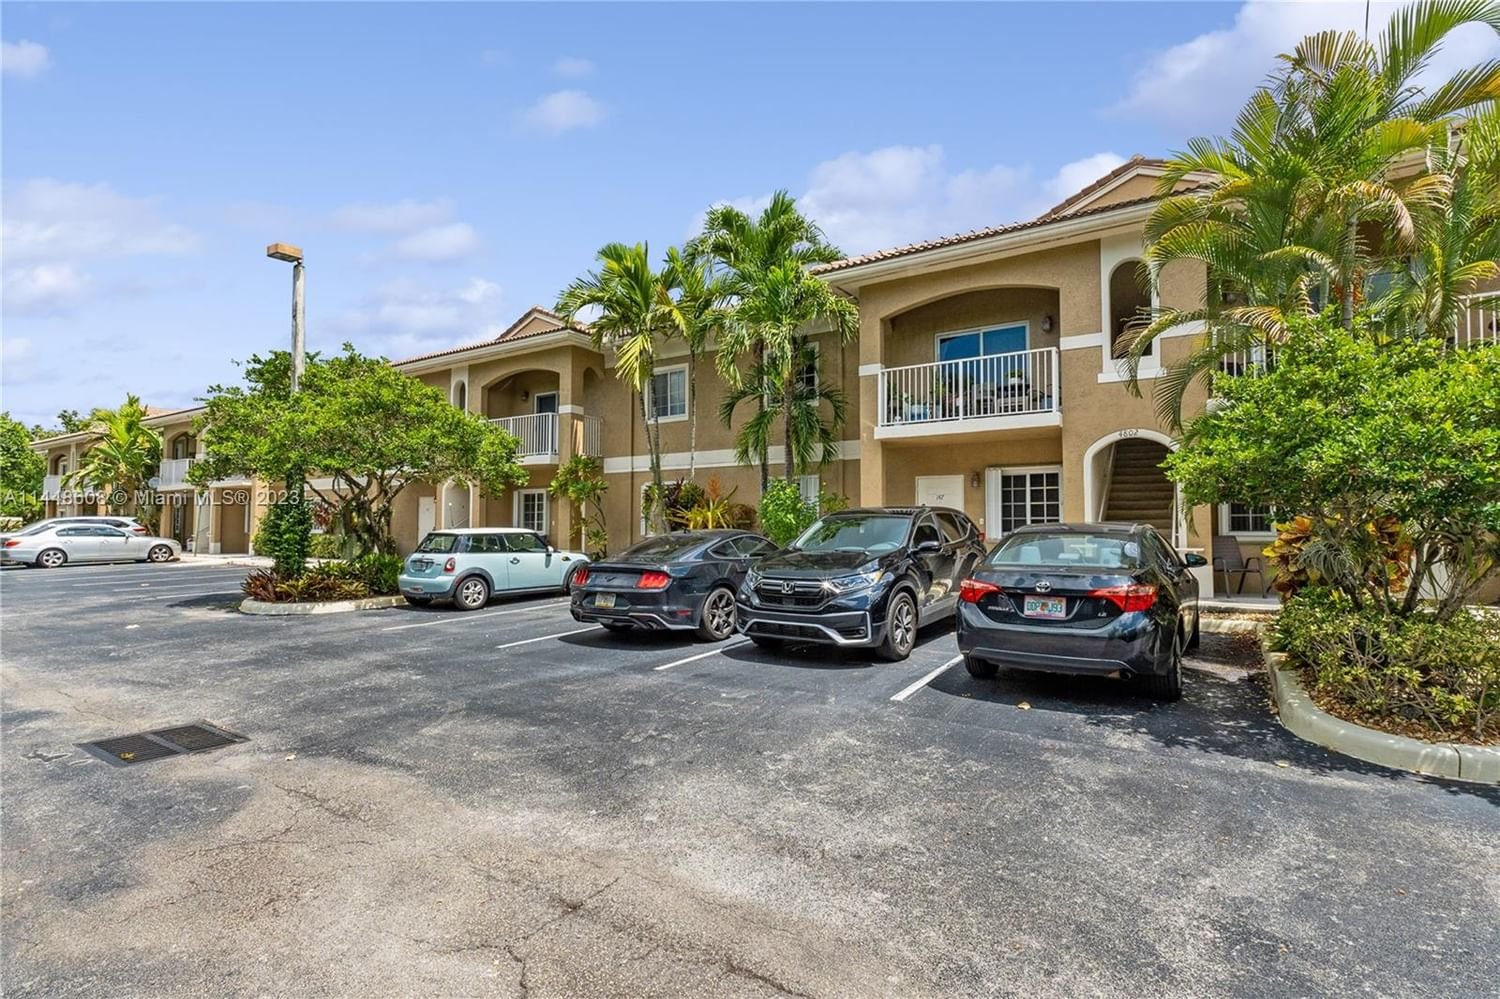 Real estate property located at 4802 Washington St #7, Broward County, WASHINGTON PALMS CONDO BL, Hollywood, FL